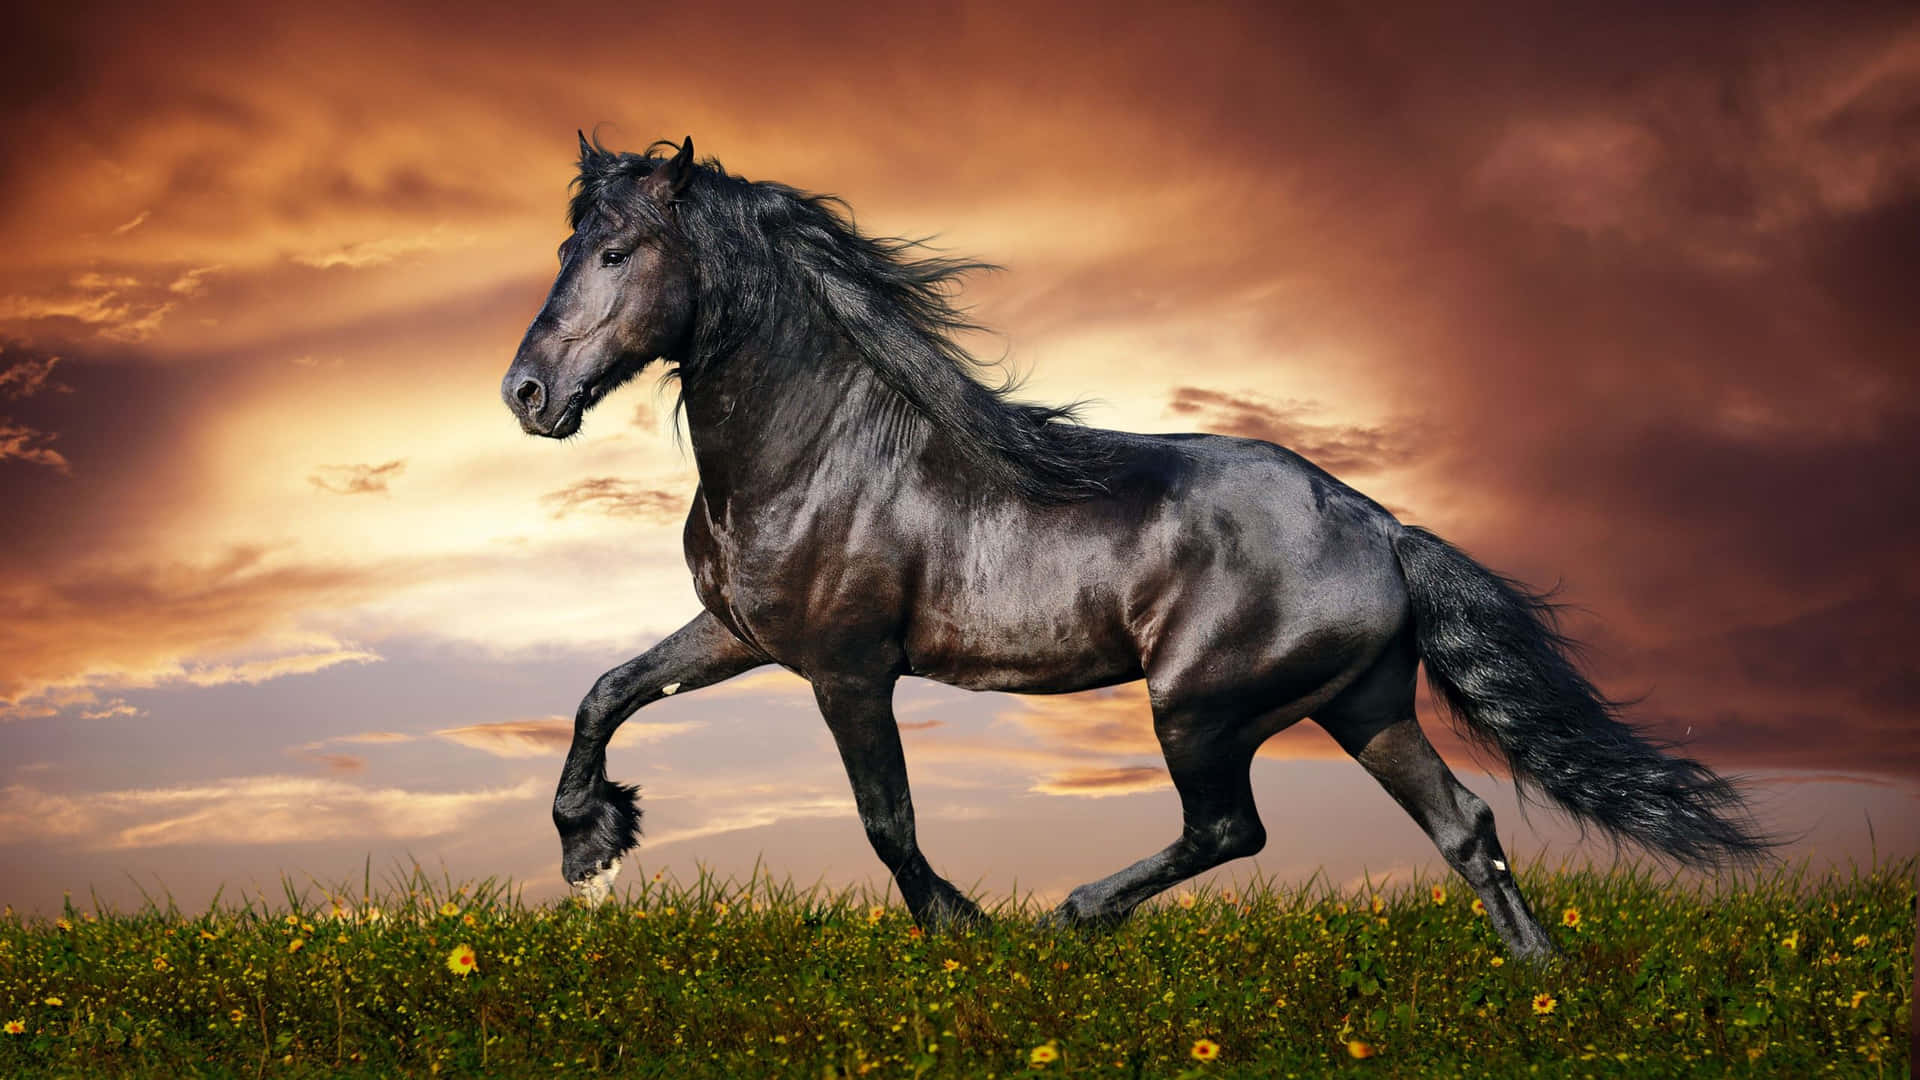 Majestic Black Horse Gallopingat Sunset Wallpaper